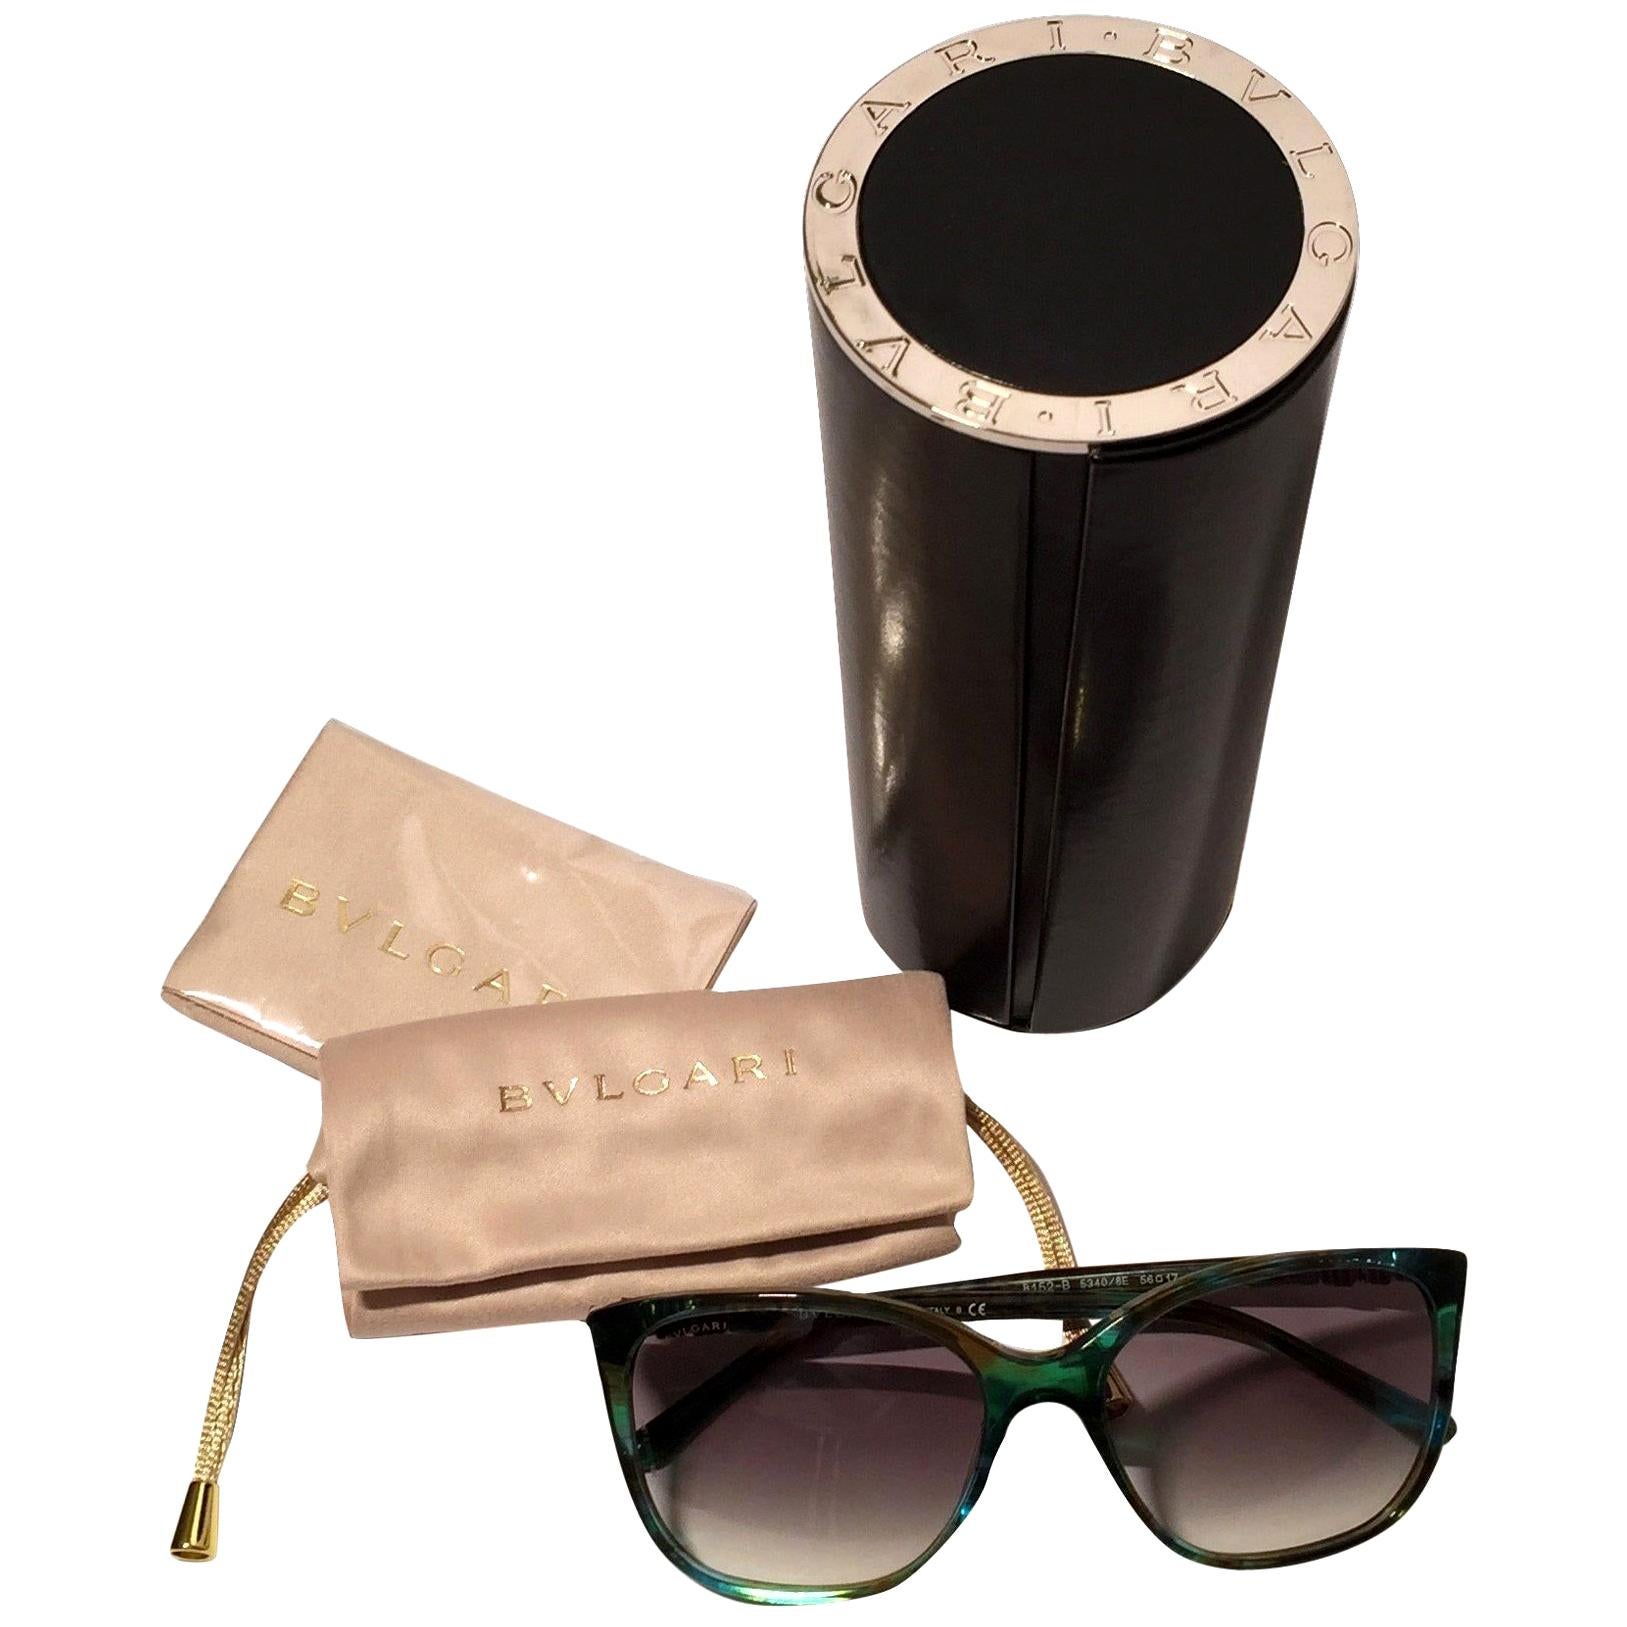 bvlgari sunglasses case sale